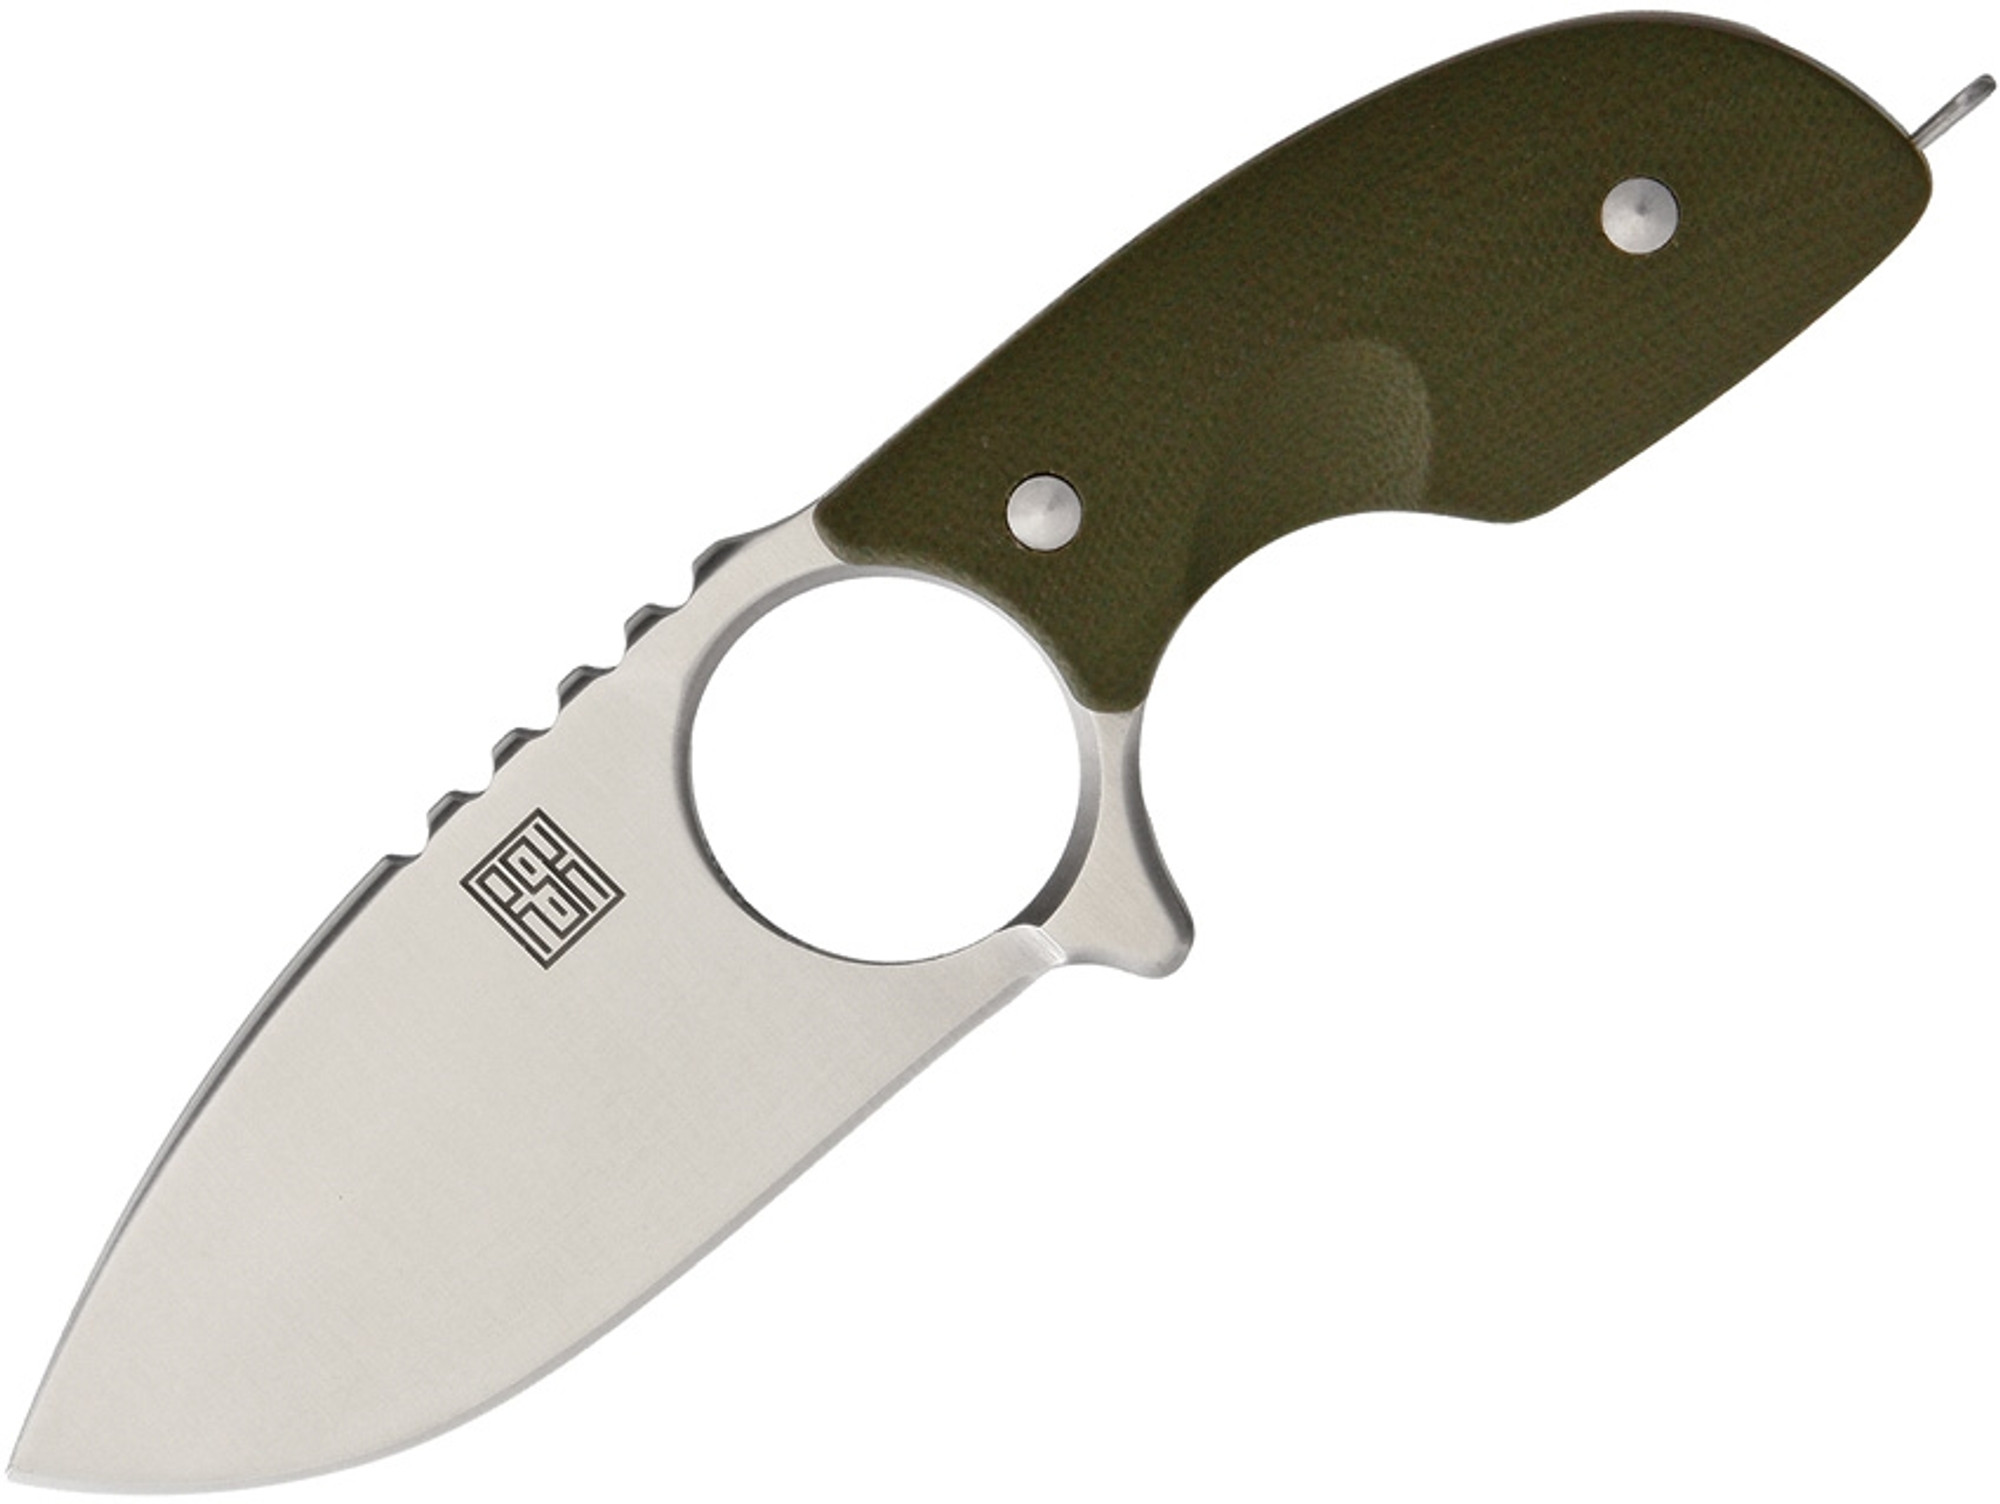 Real Steel 3134 Mini 127II Neck Knife - Green G10